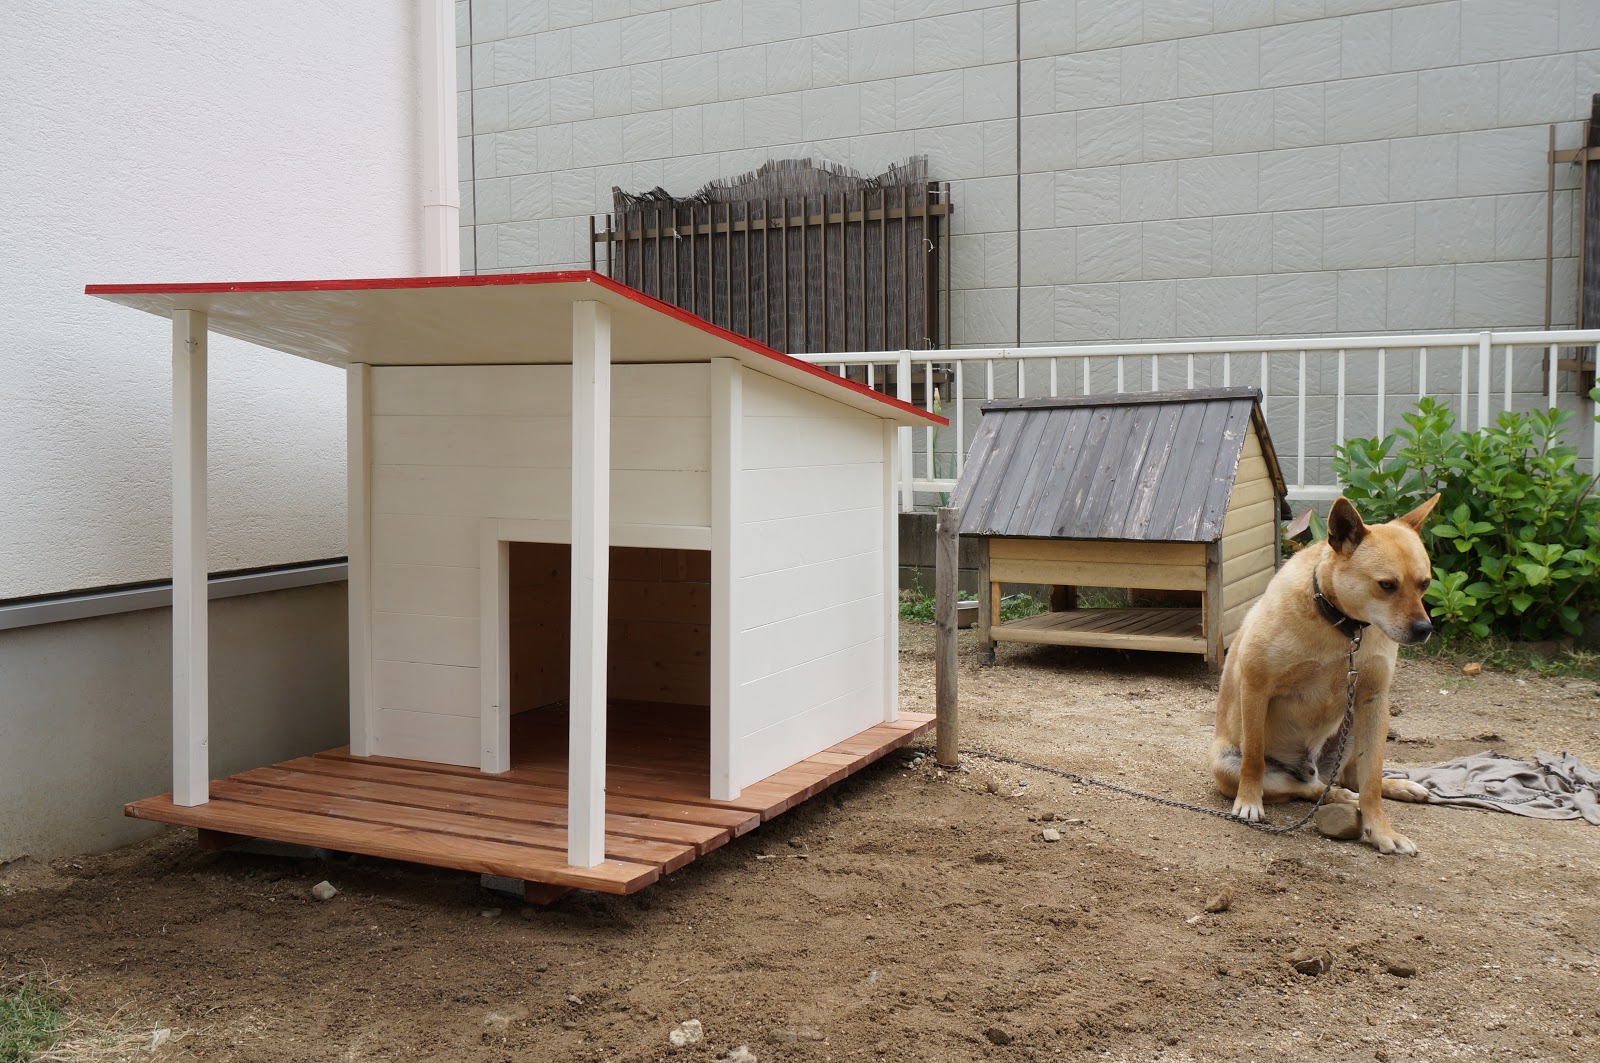 Something Good By Diy 手作りのステキな何か 去年の5月に作った犬小屋の屋根をペンキ塗りしました 1年で結構劣化しますね